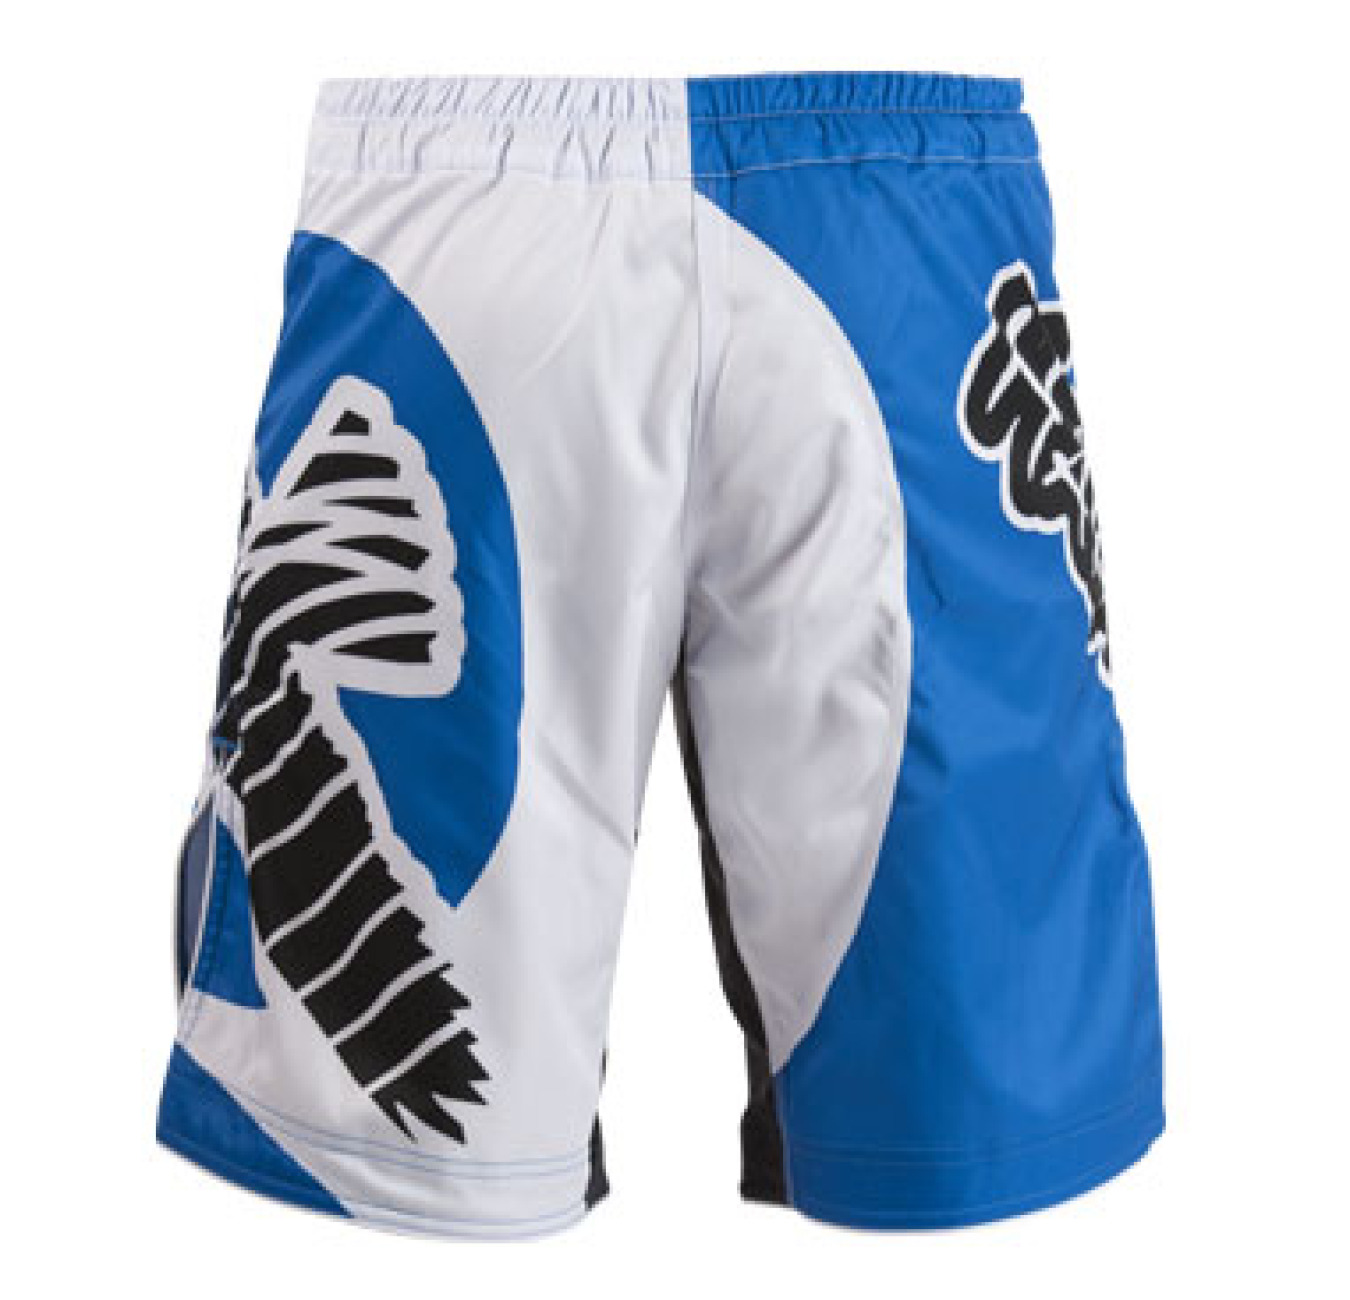 MMA Clothing Site: My new Hayabusa MMA Shorts